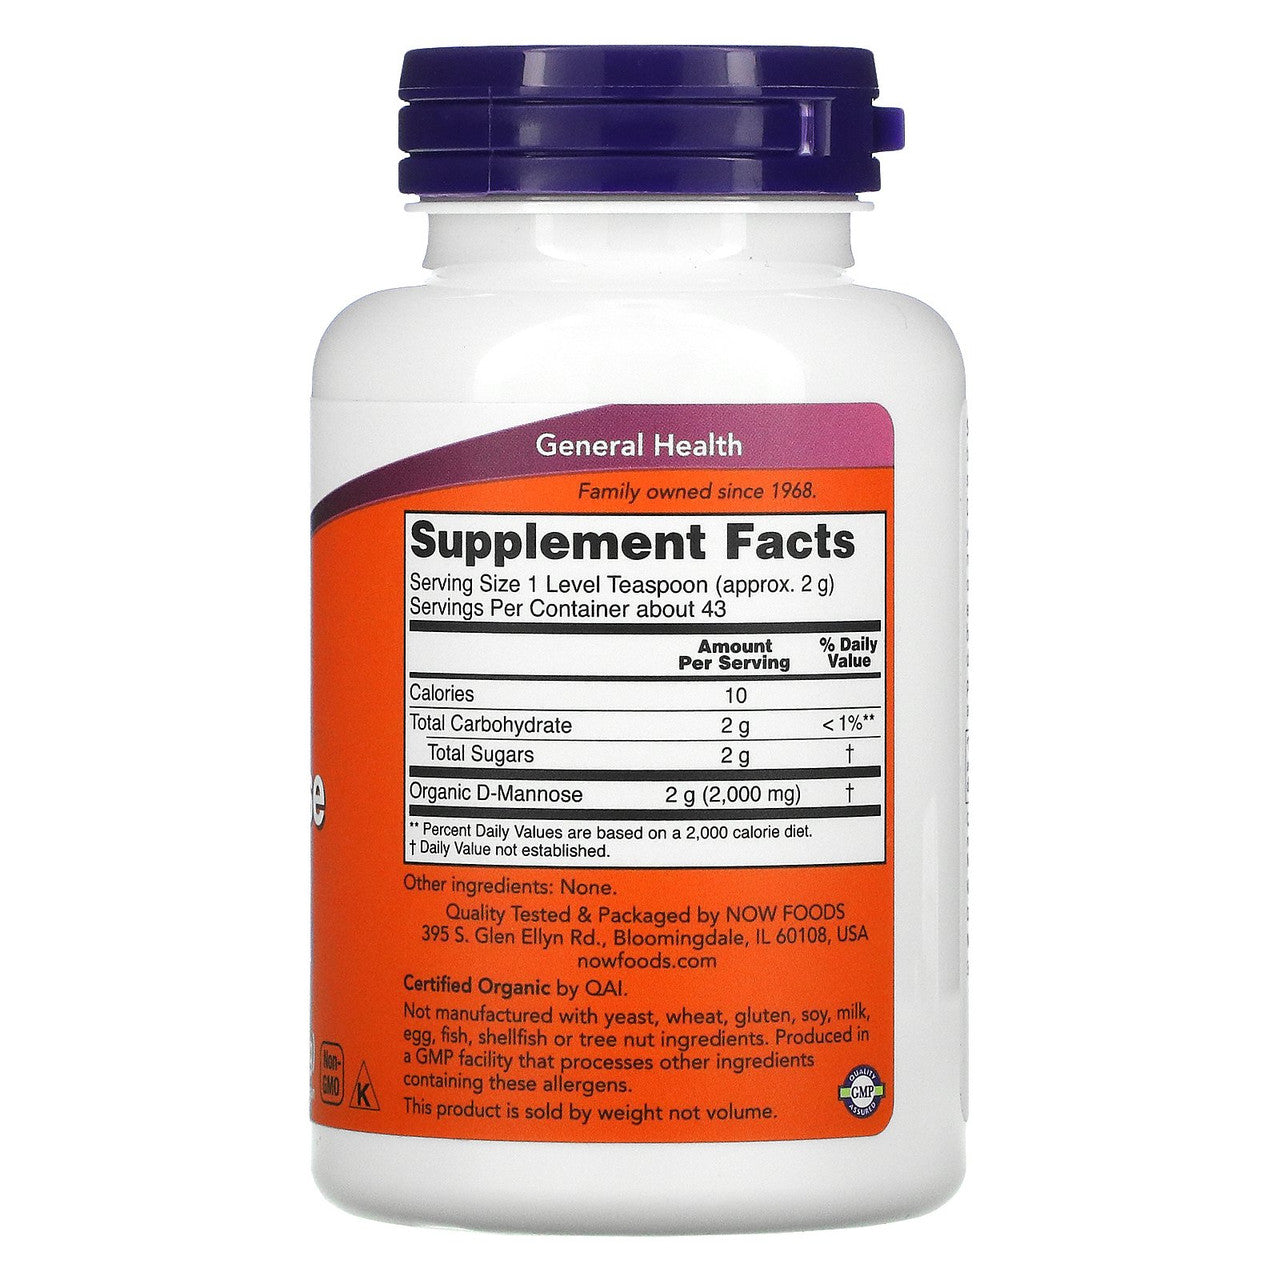 Now D-Mannose Powder Supplement Facts Label